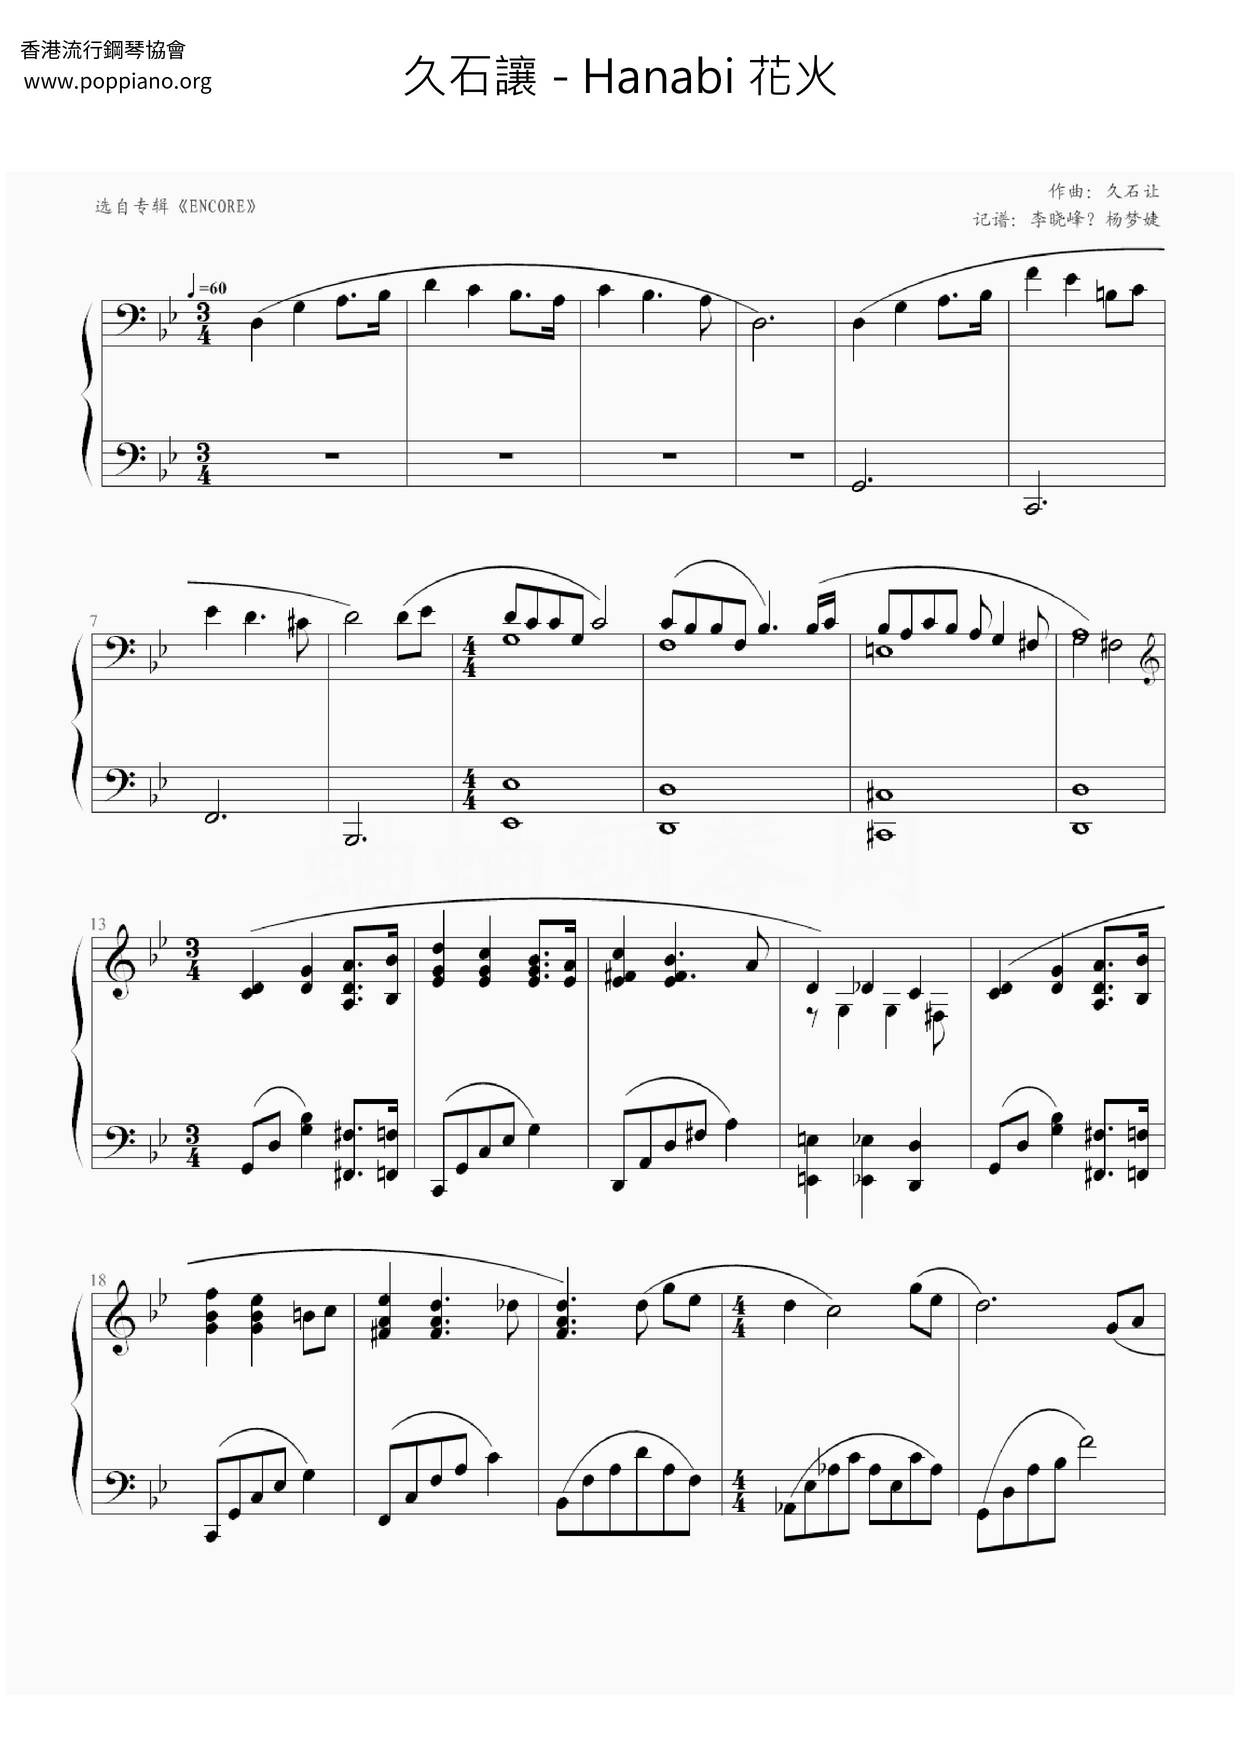 ☆ Hanabi 花火 - Sheet Music / Piano Score Free PDF Download - HK 